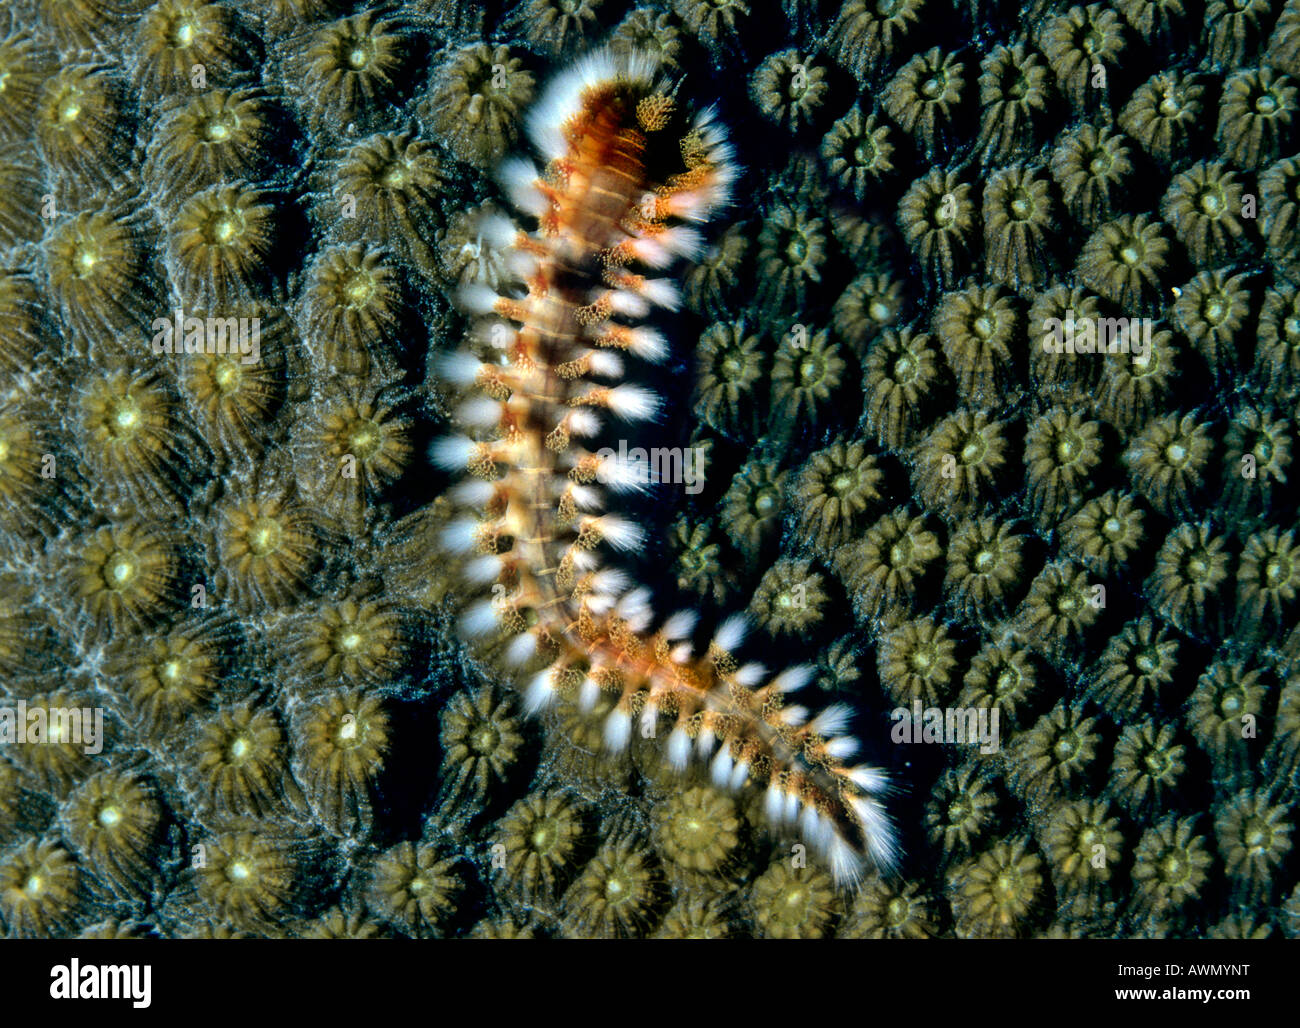 Bearded Fireworm (Hermodice carunculata) on coral, Mediterranean Sea, Turkey, Europe Stock Photo